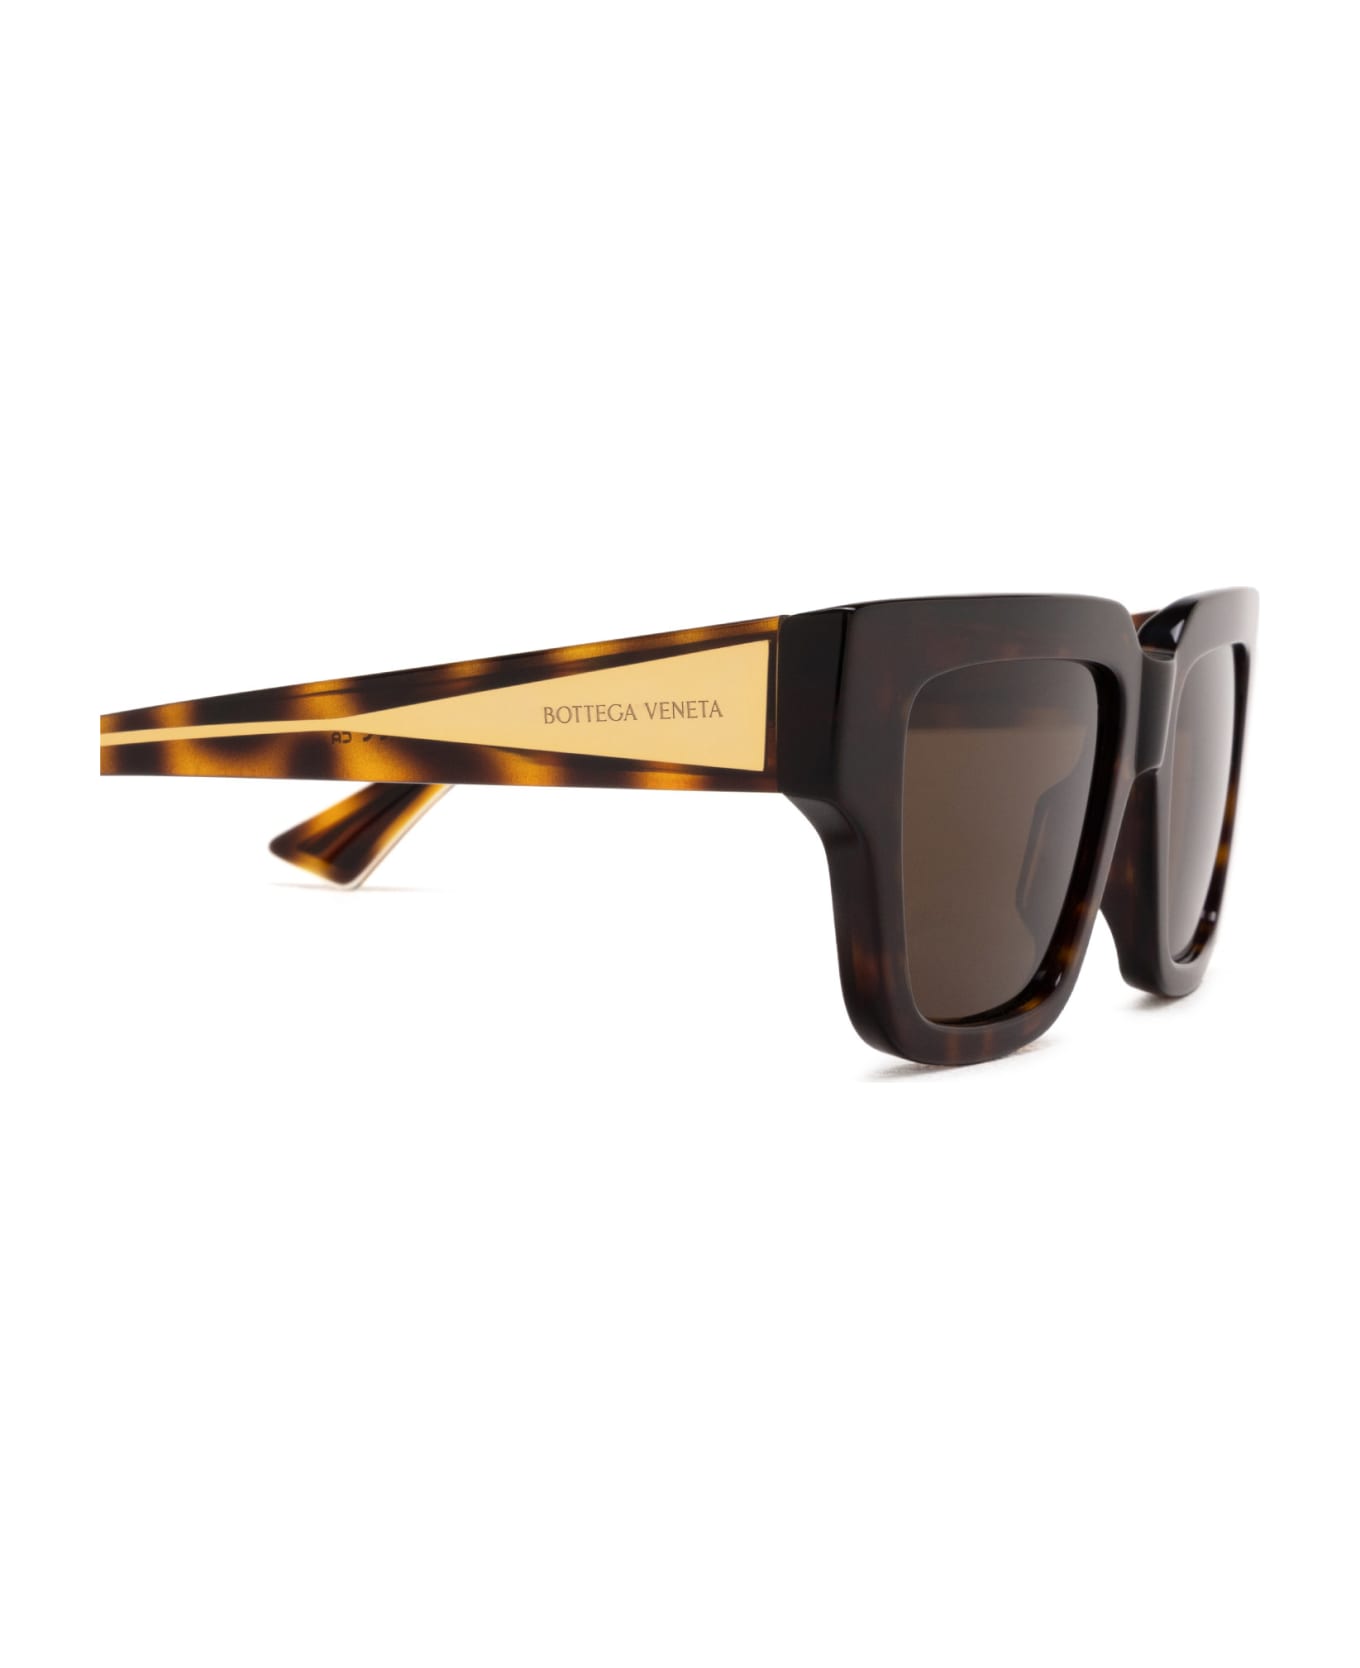 Bottega Veneta Eyewear Bv1276s Havana Sunglasses - Havana サングラス